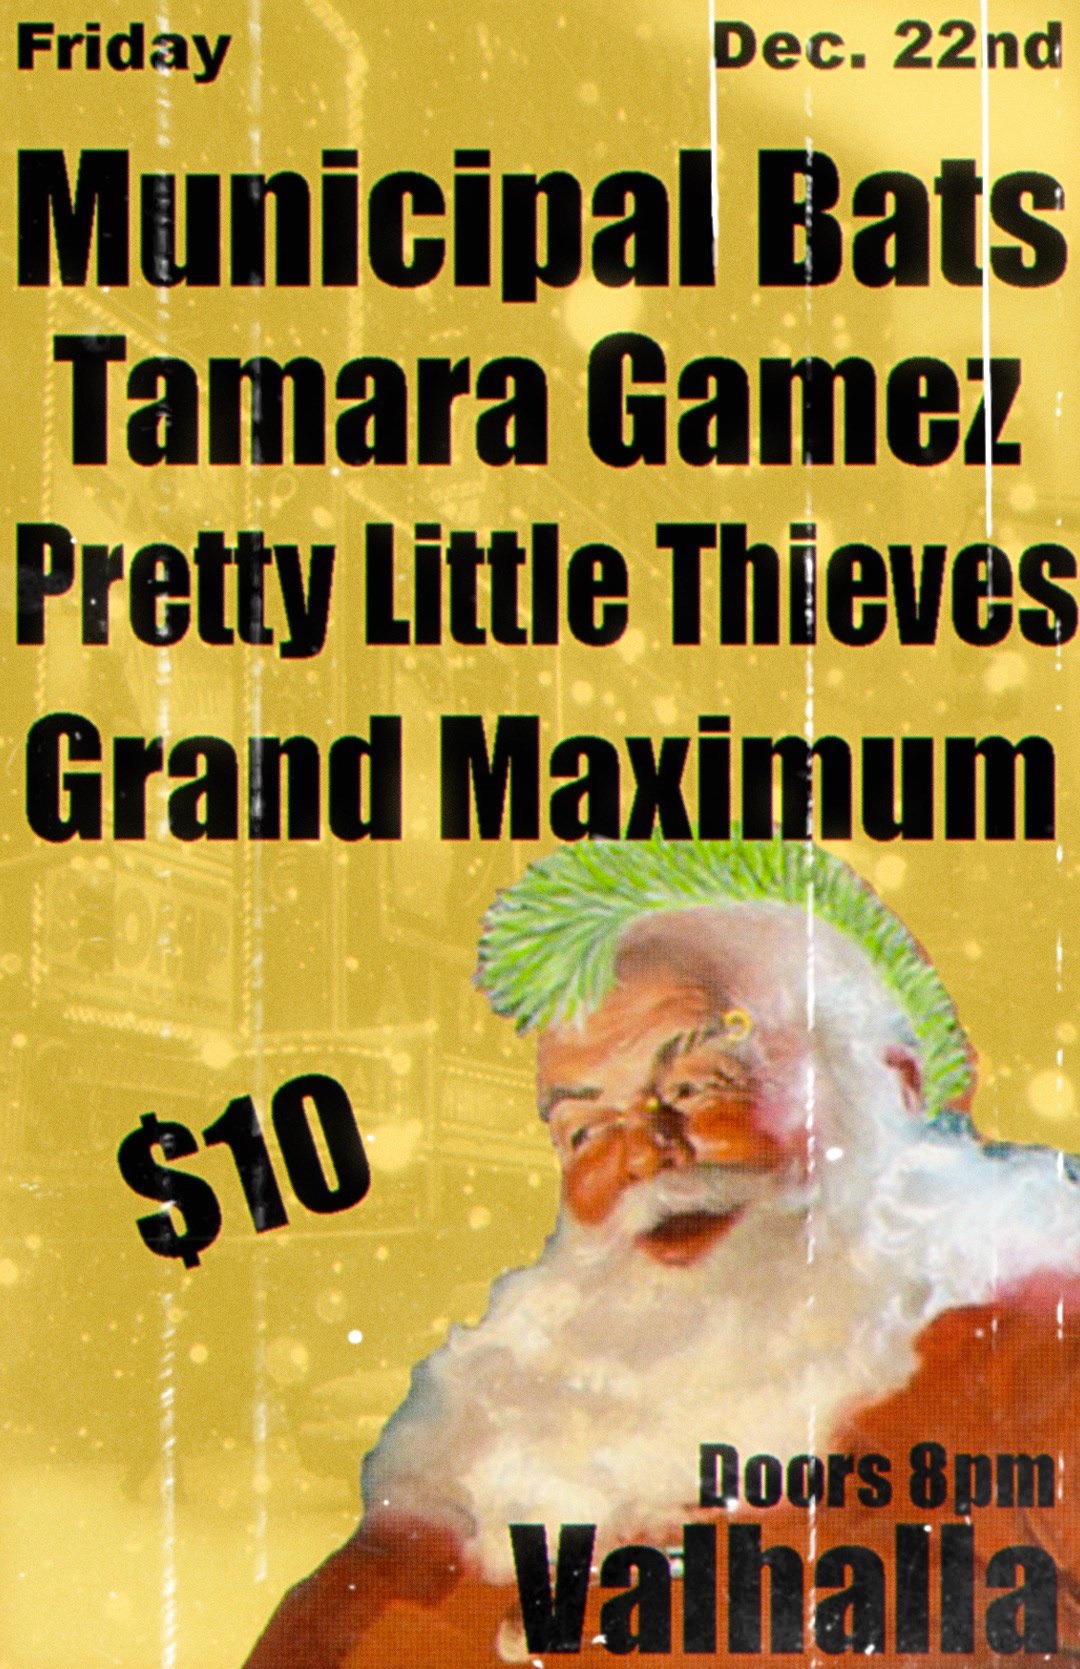 Municipal Bats, Tamara Gamez, Pretty Little Thieves, Grand Maximum